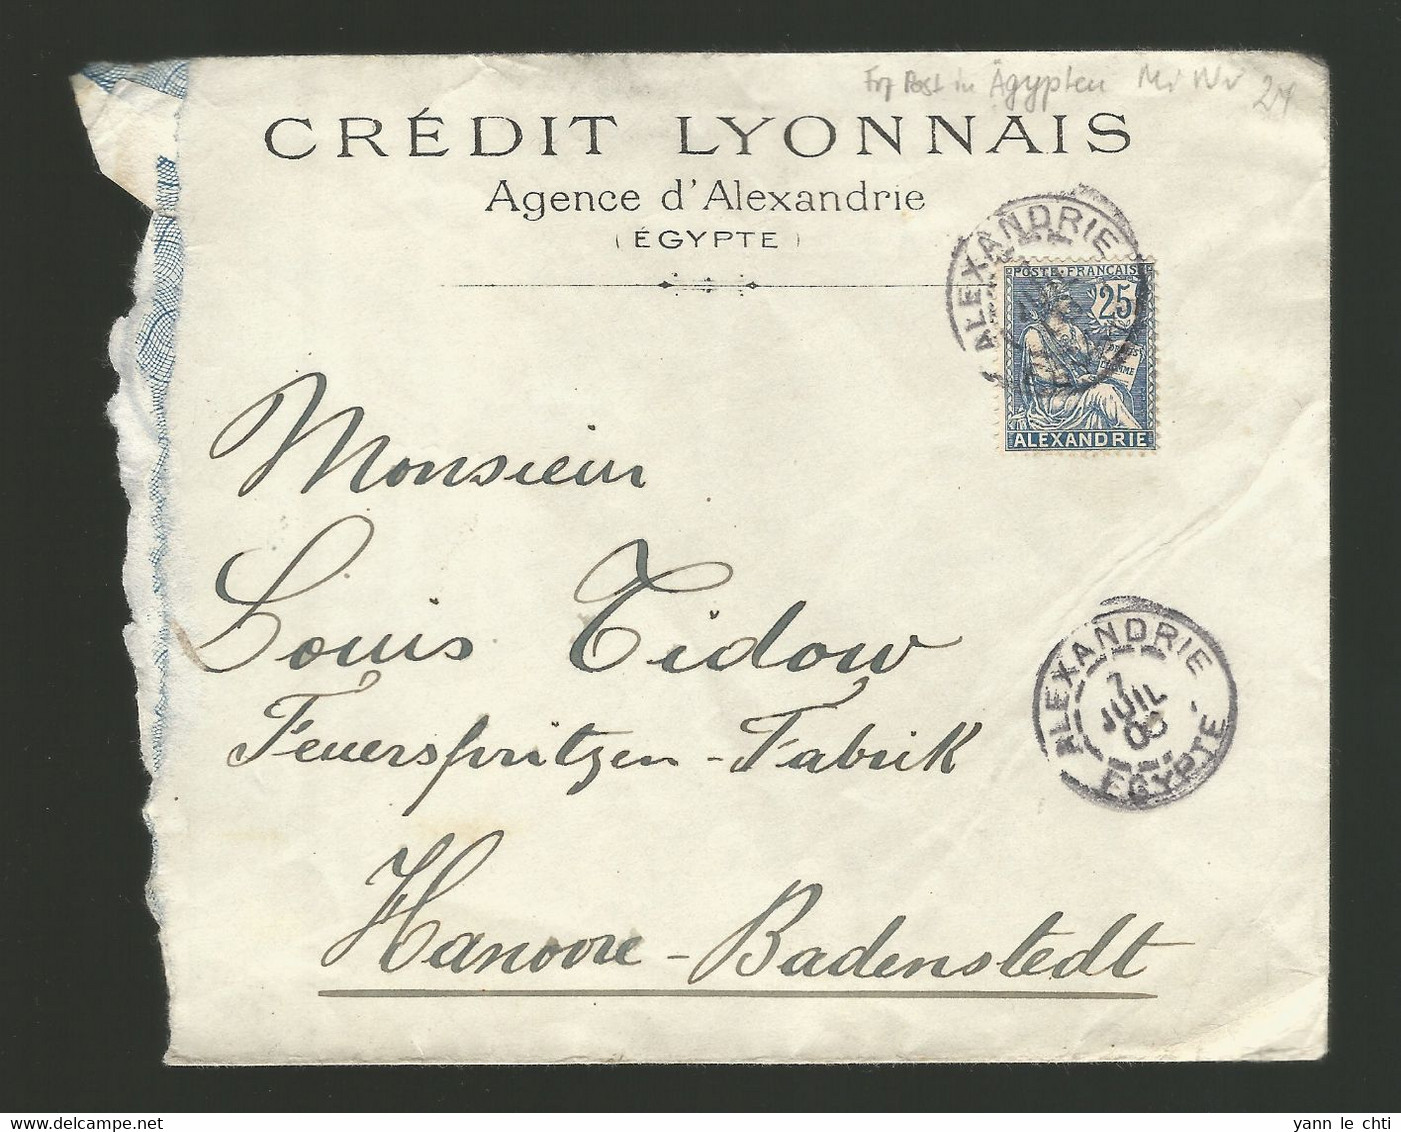 Brief Enveloppe Bank Banque Credit Lyonnais Alexandrie Egypte 1906 Pour Hannover Badenstedt Feuerspritzen Fabrik - Storia Postale